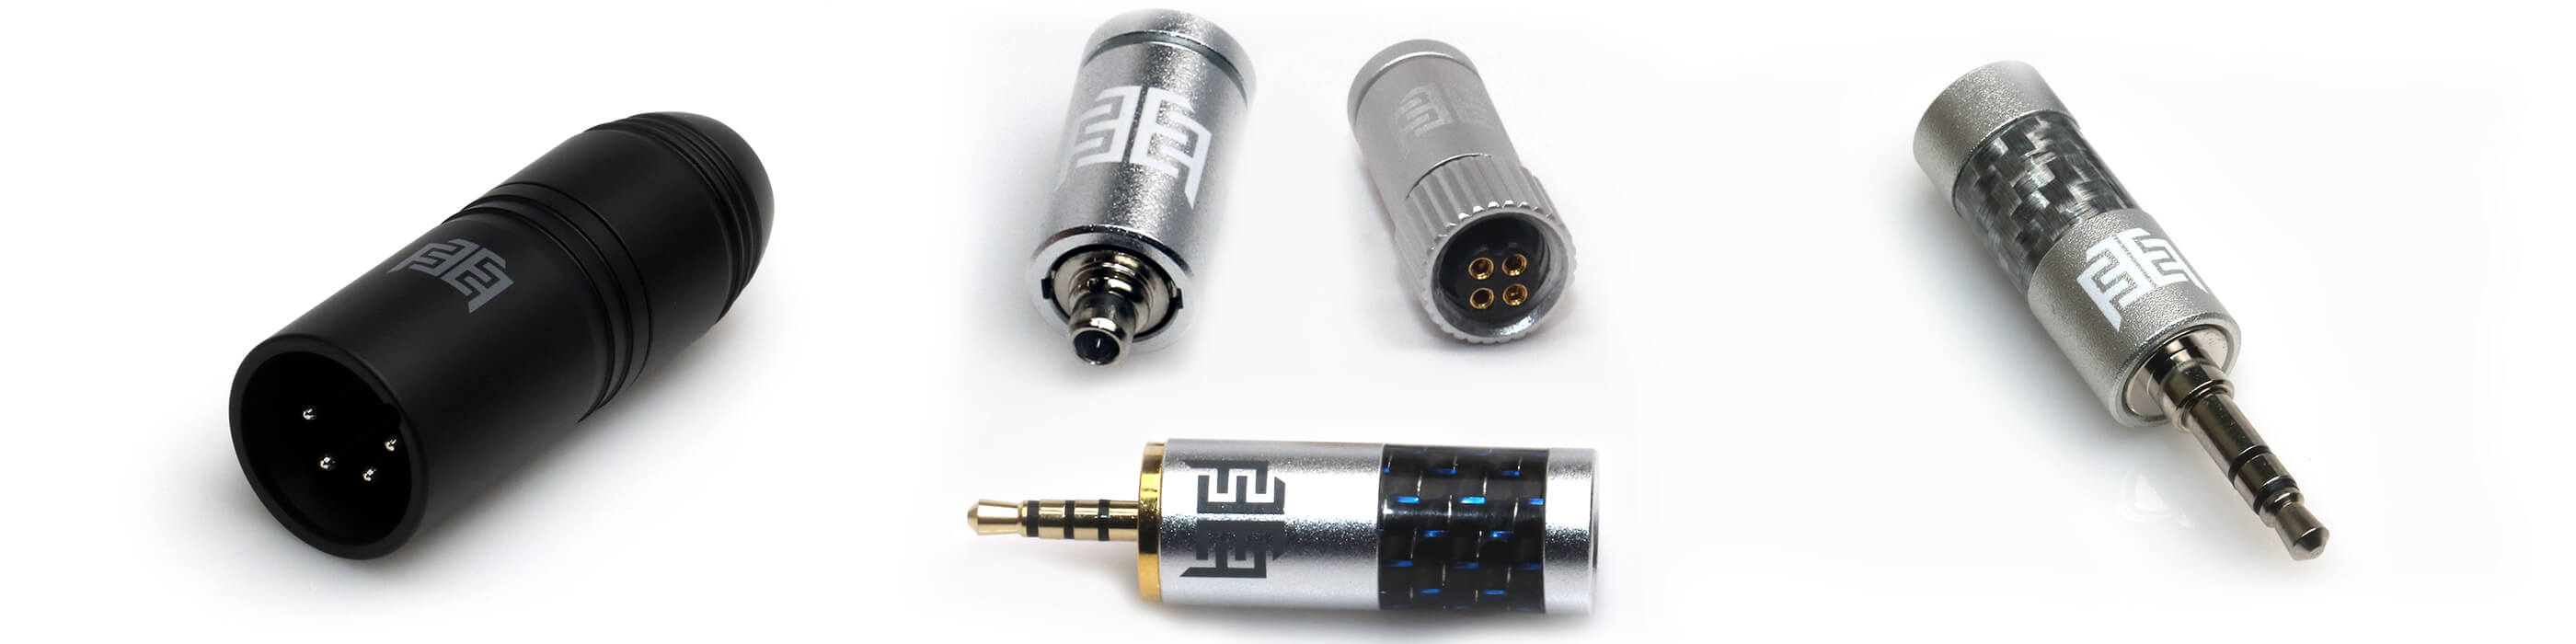 double-helix-cables-dhc-occ-litz-headphone-cable-eidolic-custom-connectors-diy